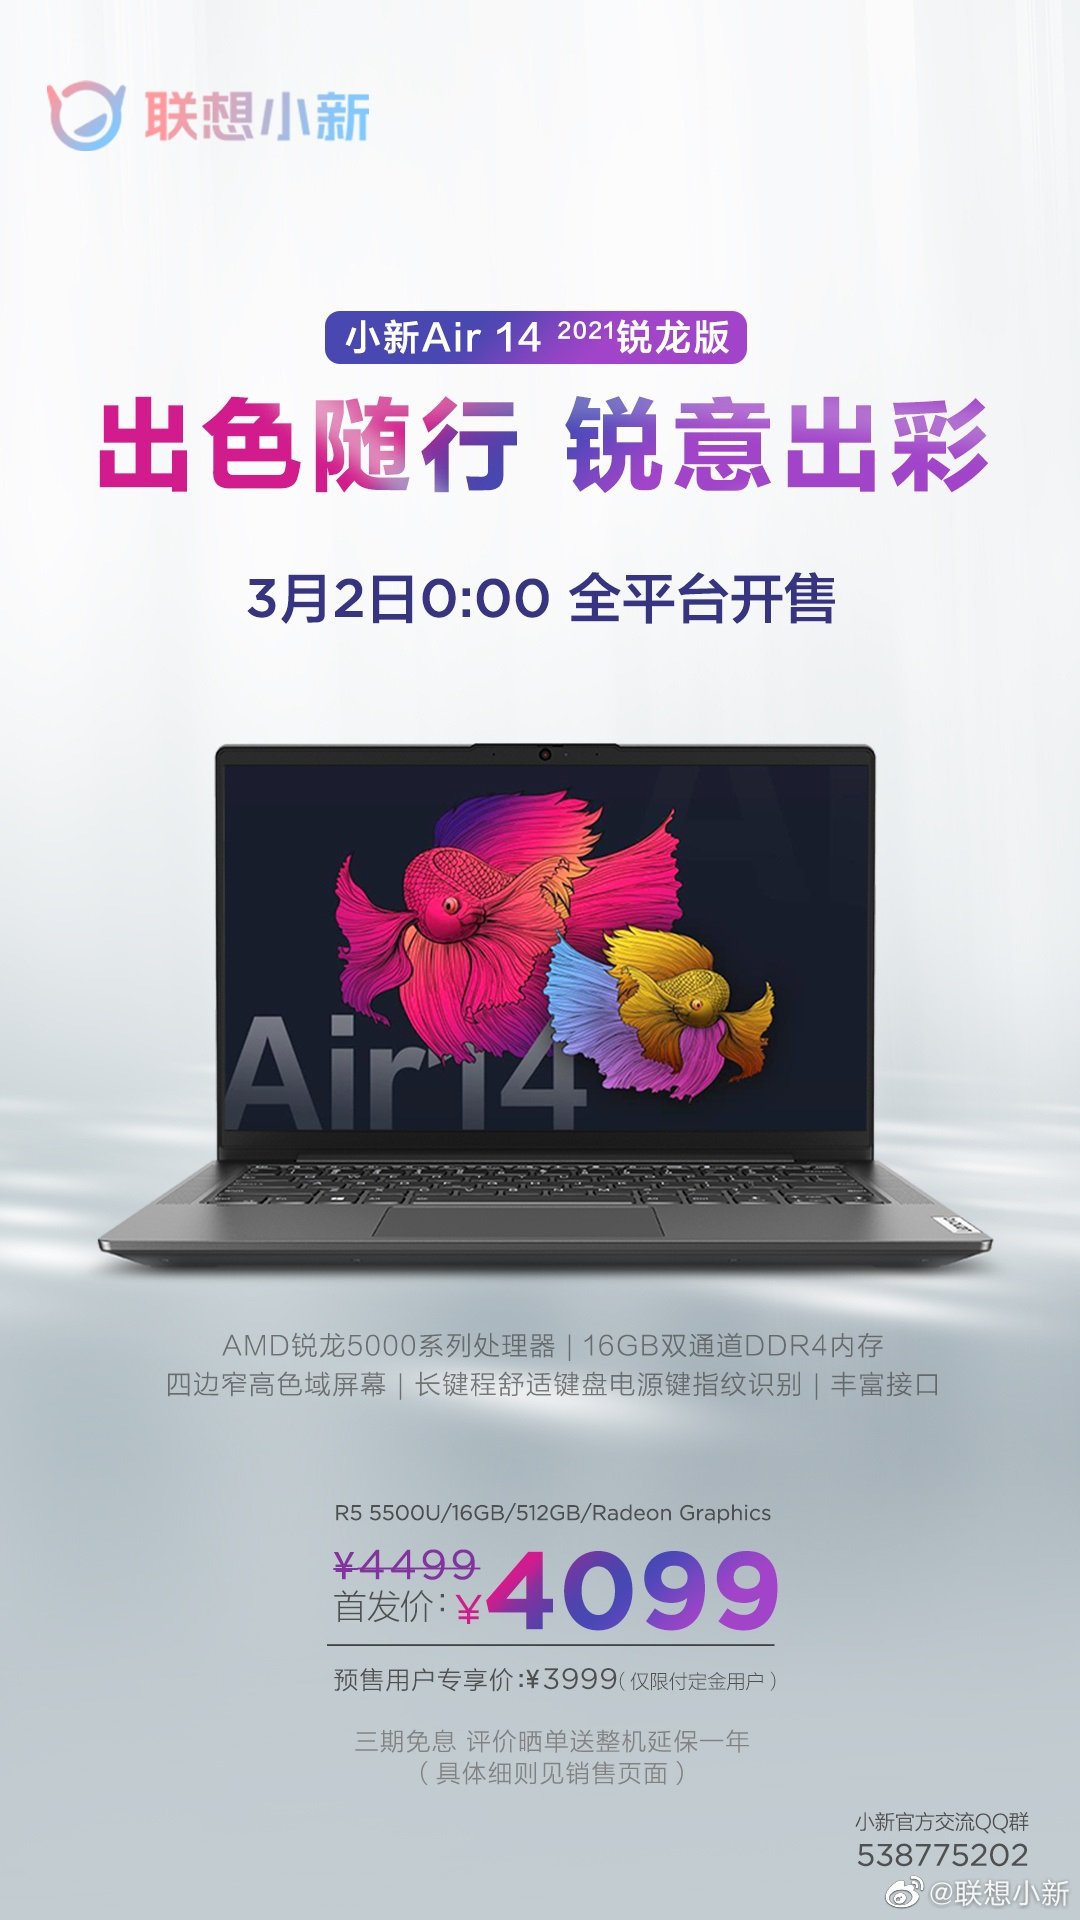 Lenovo Xiaoxin Air 14 2021 Ryzen Edition geet a China ze verkafen